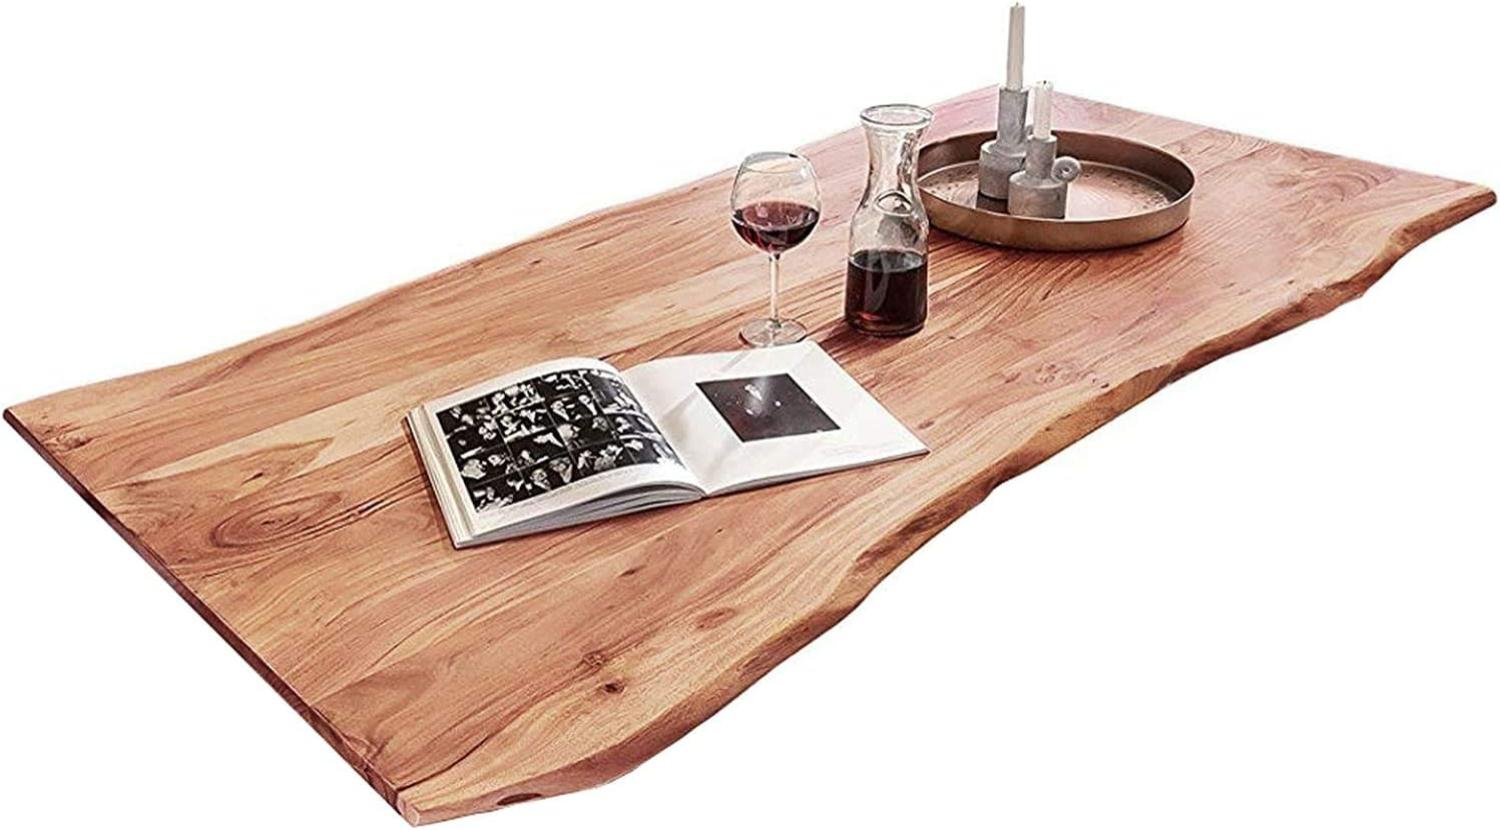 SAM Tischplatte 220x100 cm, Quintus, Akazie, naturfarben, stilvolle Baumkanten-Platte, Unikat Bild 1